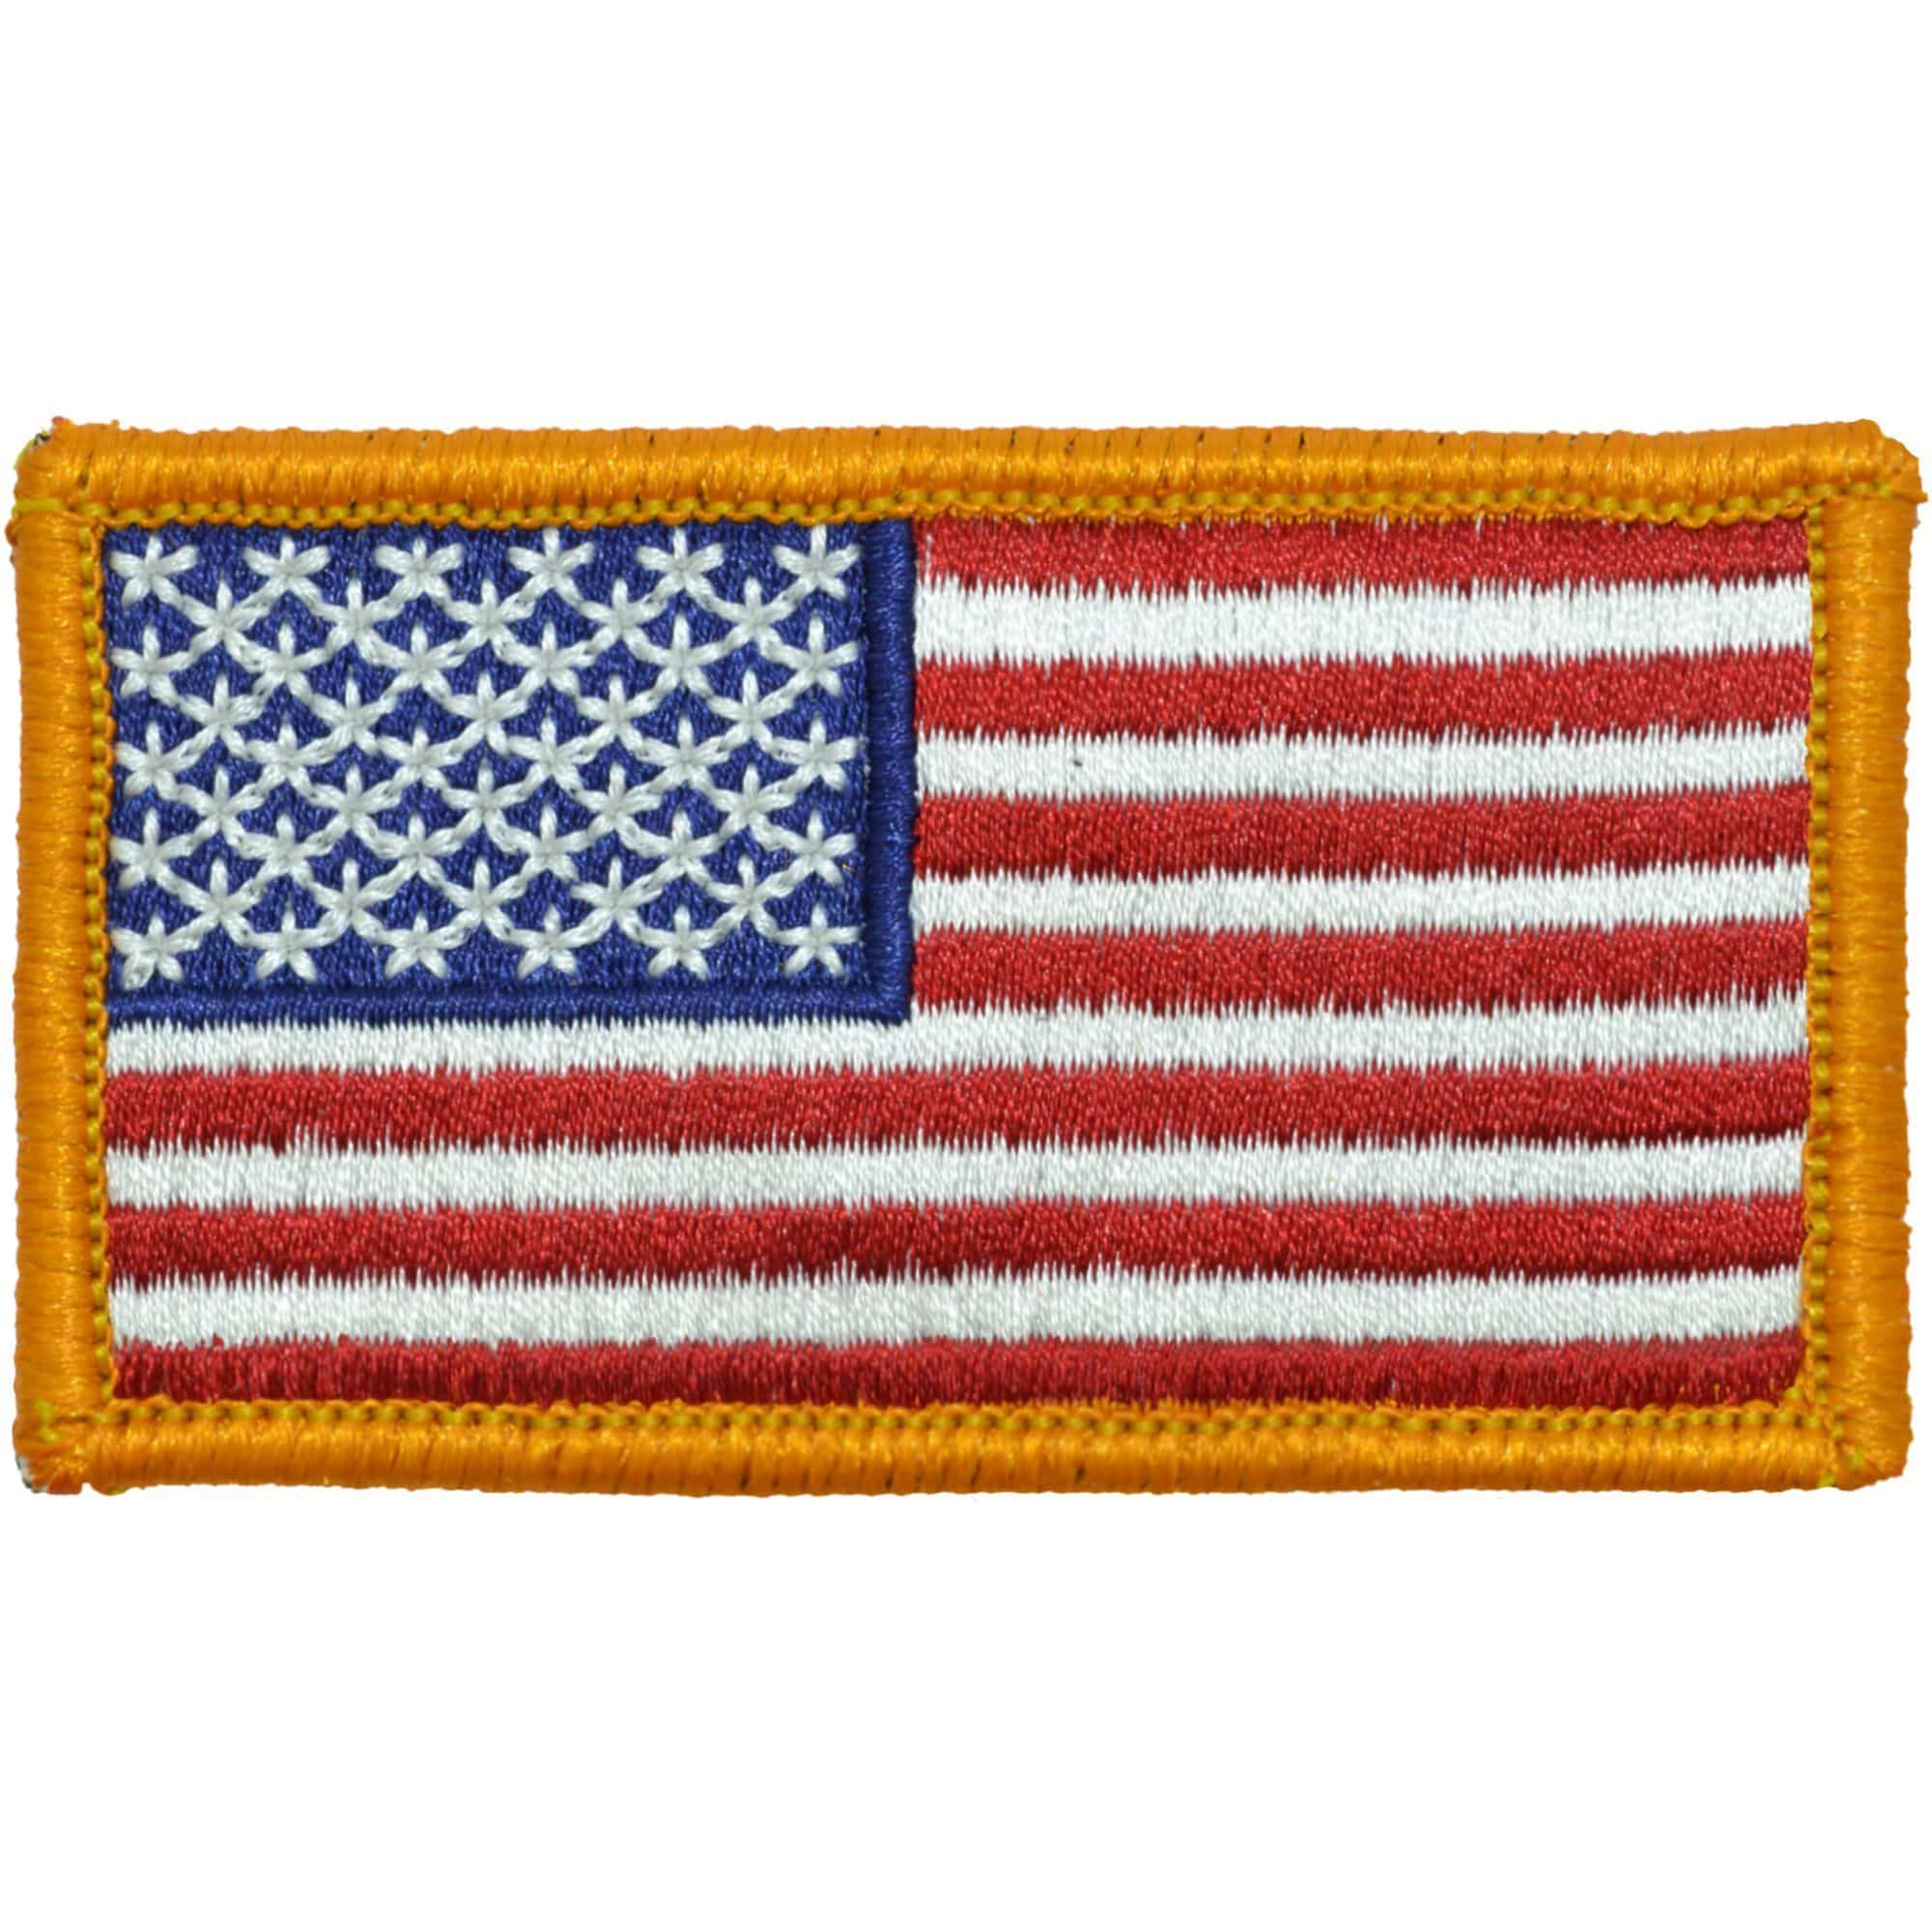 Military IR Flag Patch, Forward